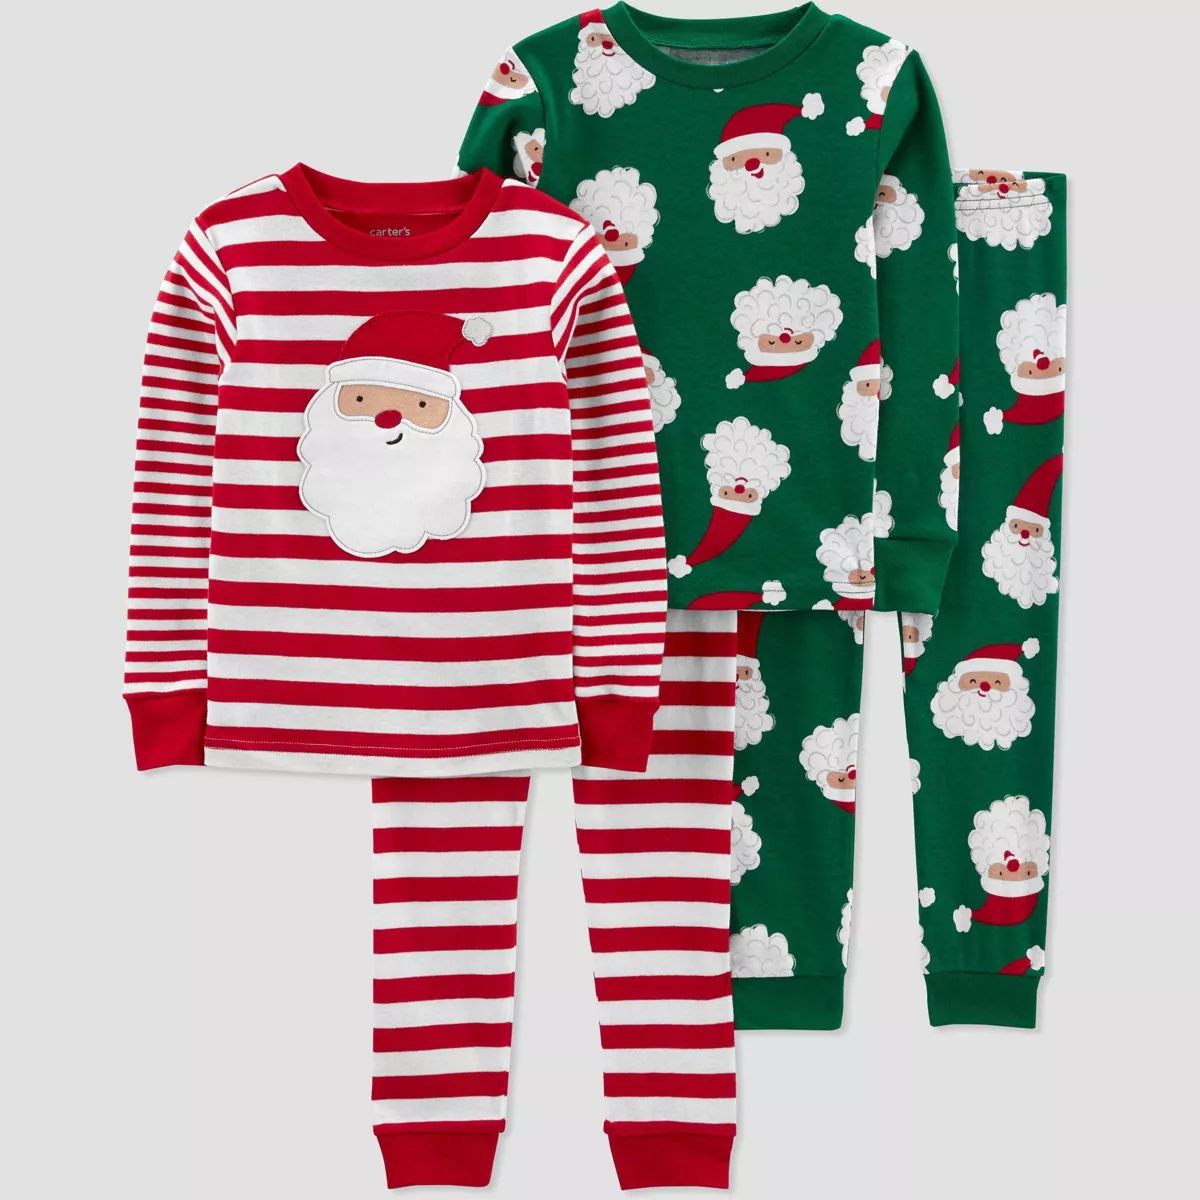 Carter's Just One You® Toddler 4pc Striped Santa Pajama Set - Red 3T | Target